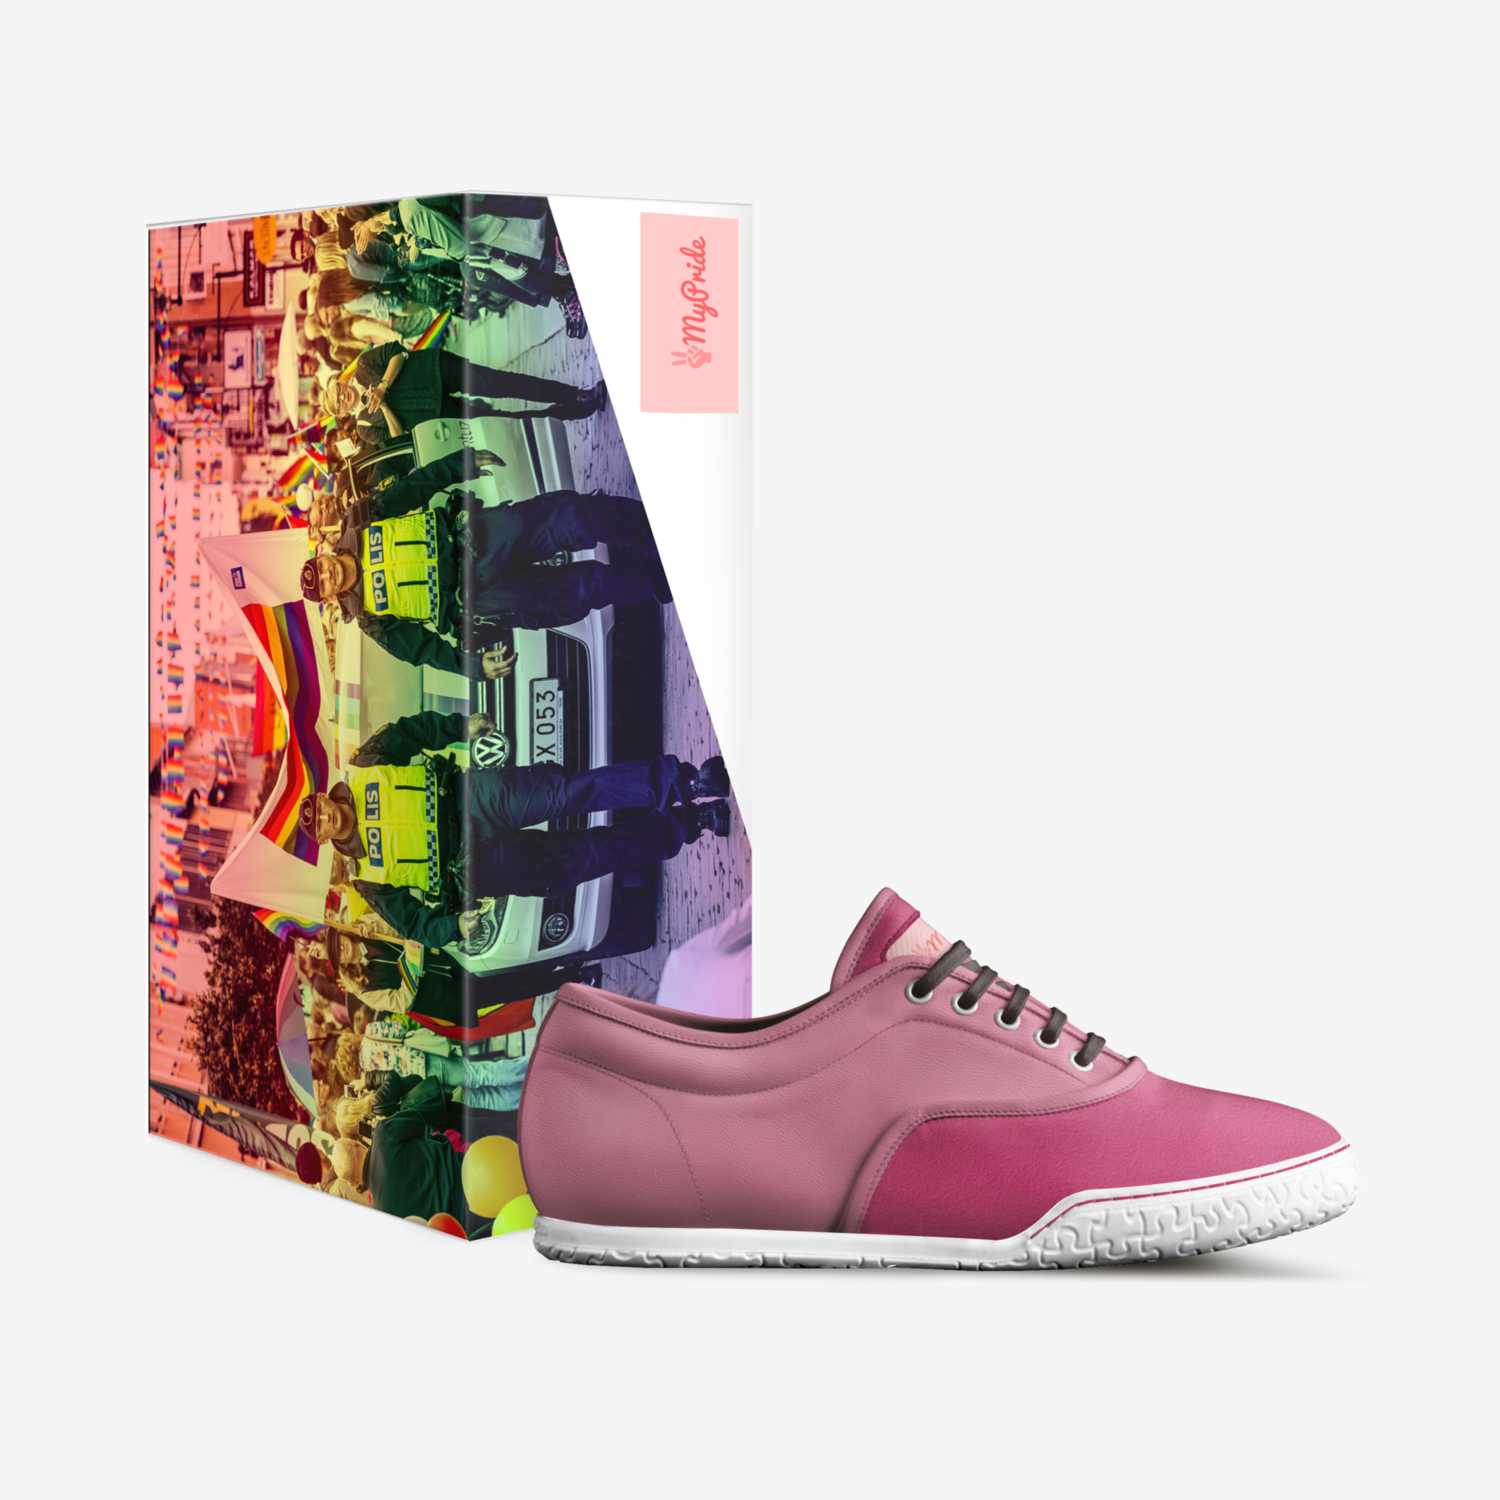 MyPride custom made in Italy shoes by Vittorio De Oro | Box view